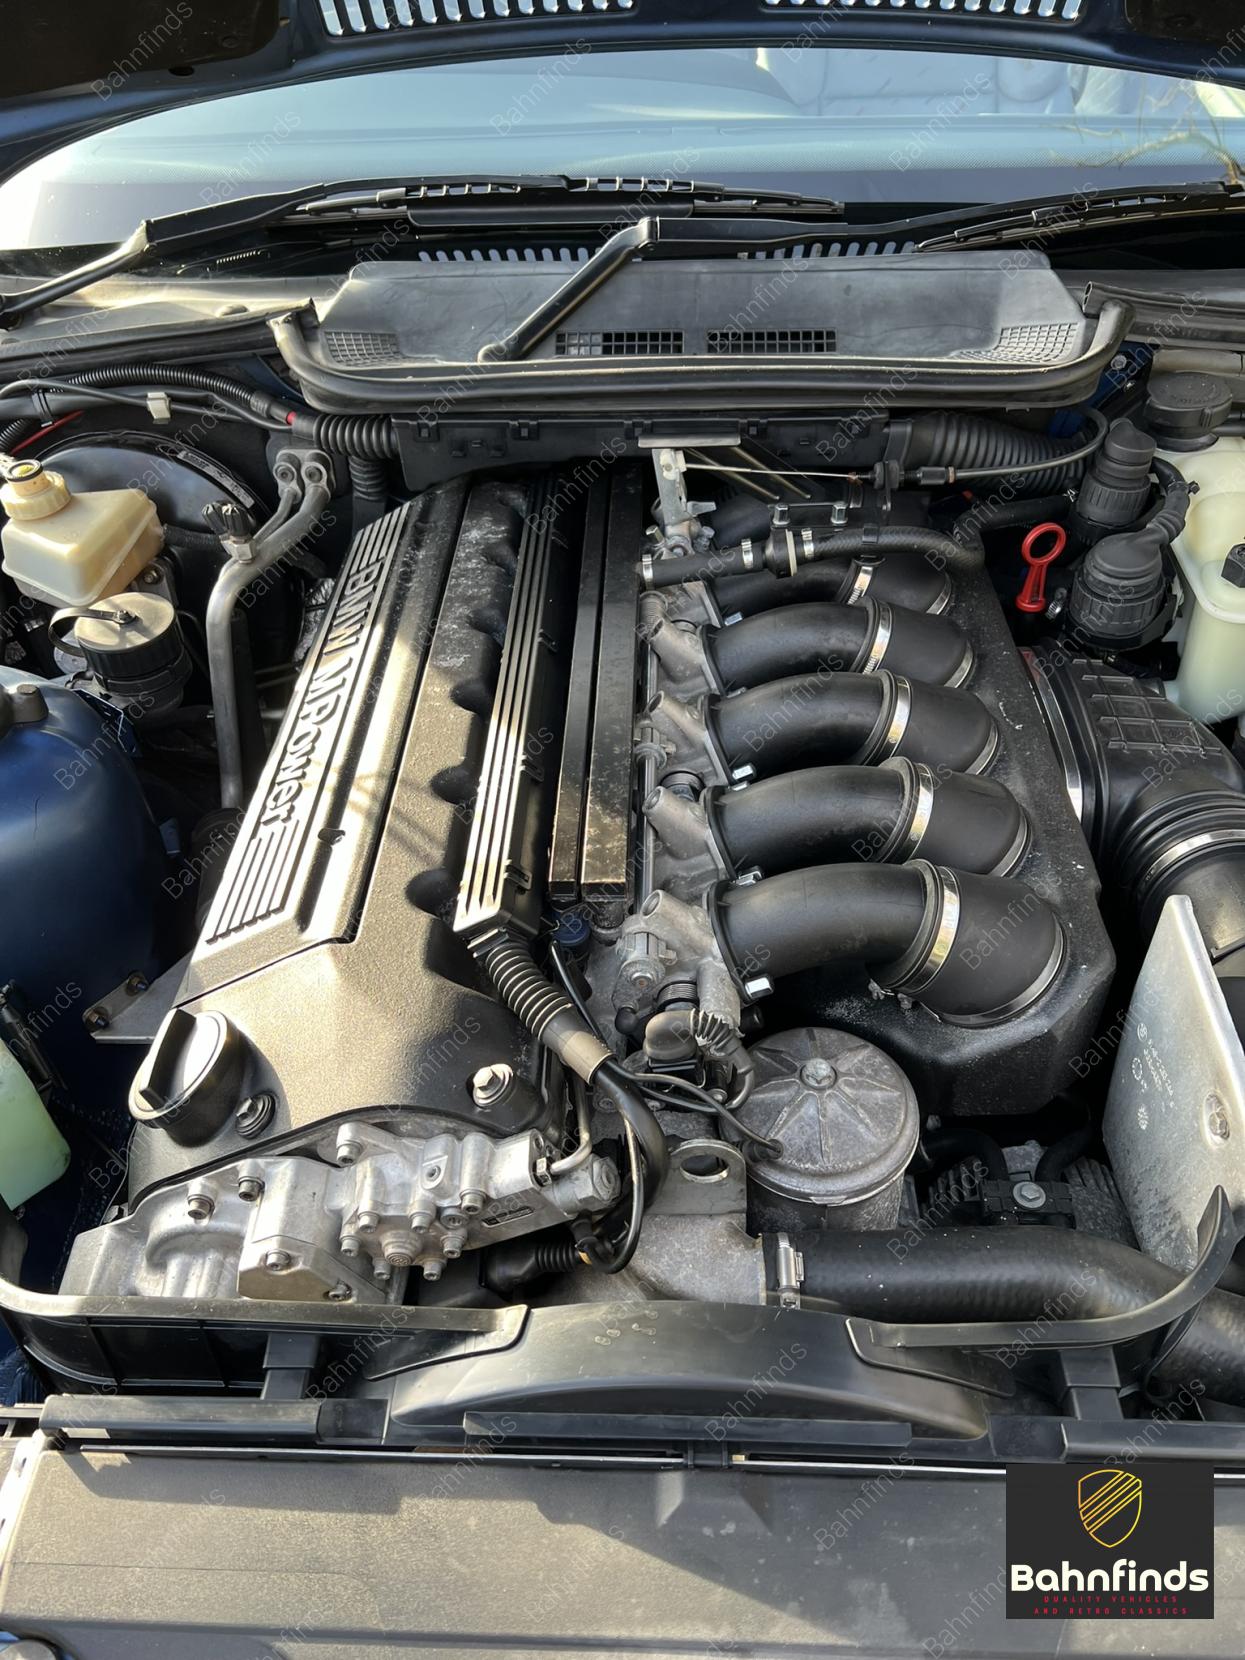 BMW M3 3.2 Evolution Coupe 2dr Petrol Manual (267 g/km, 321 bhp)